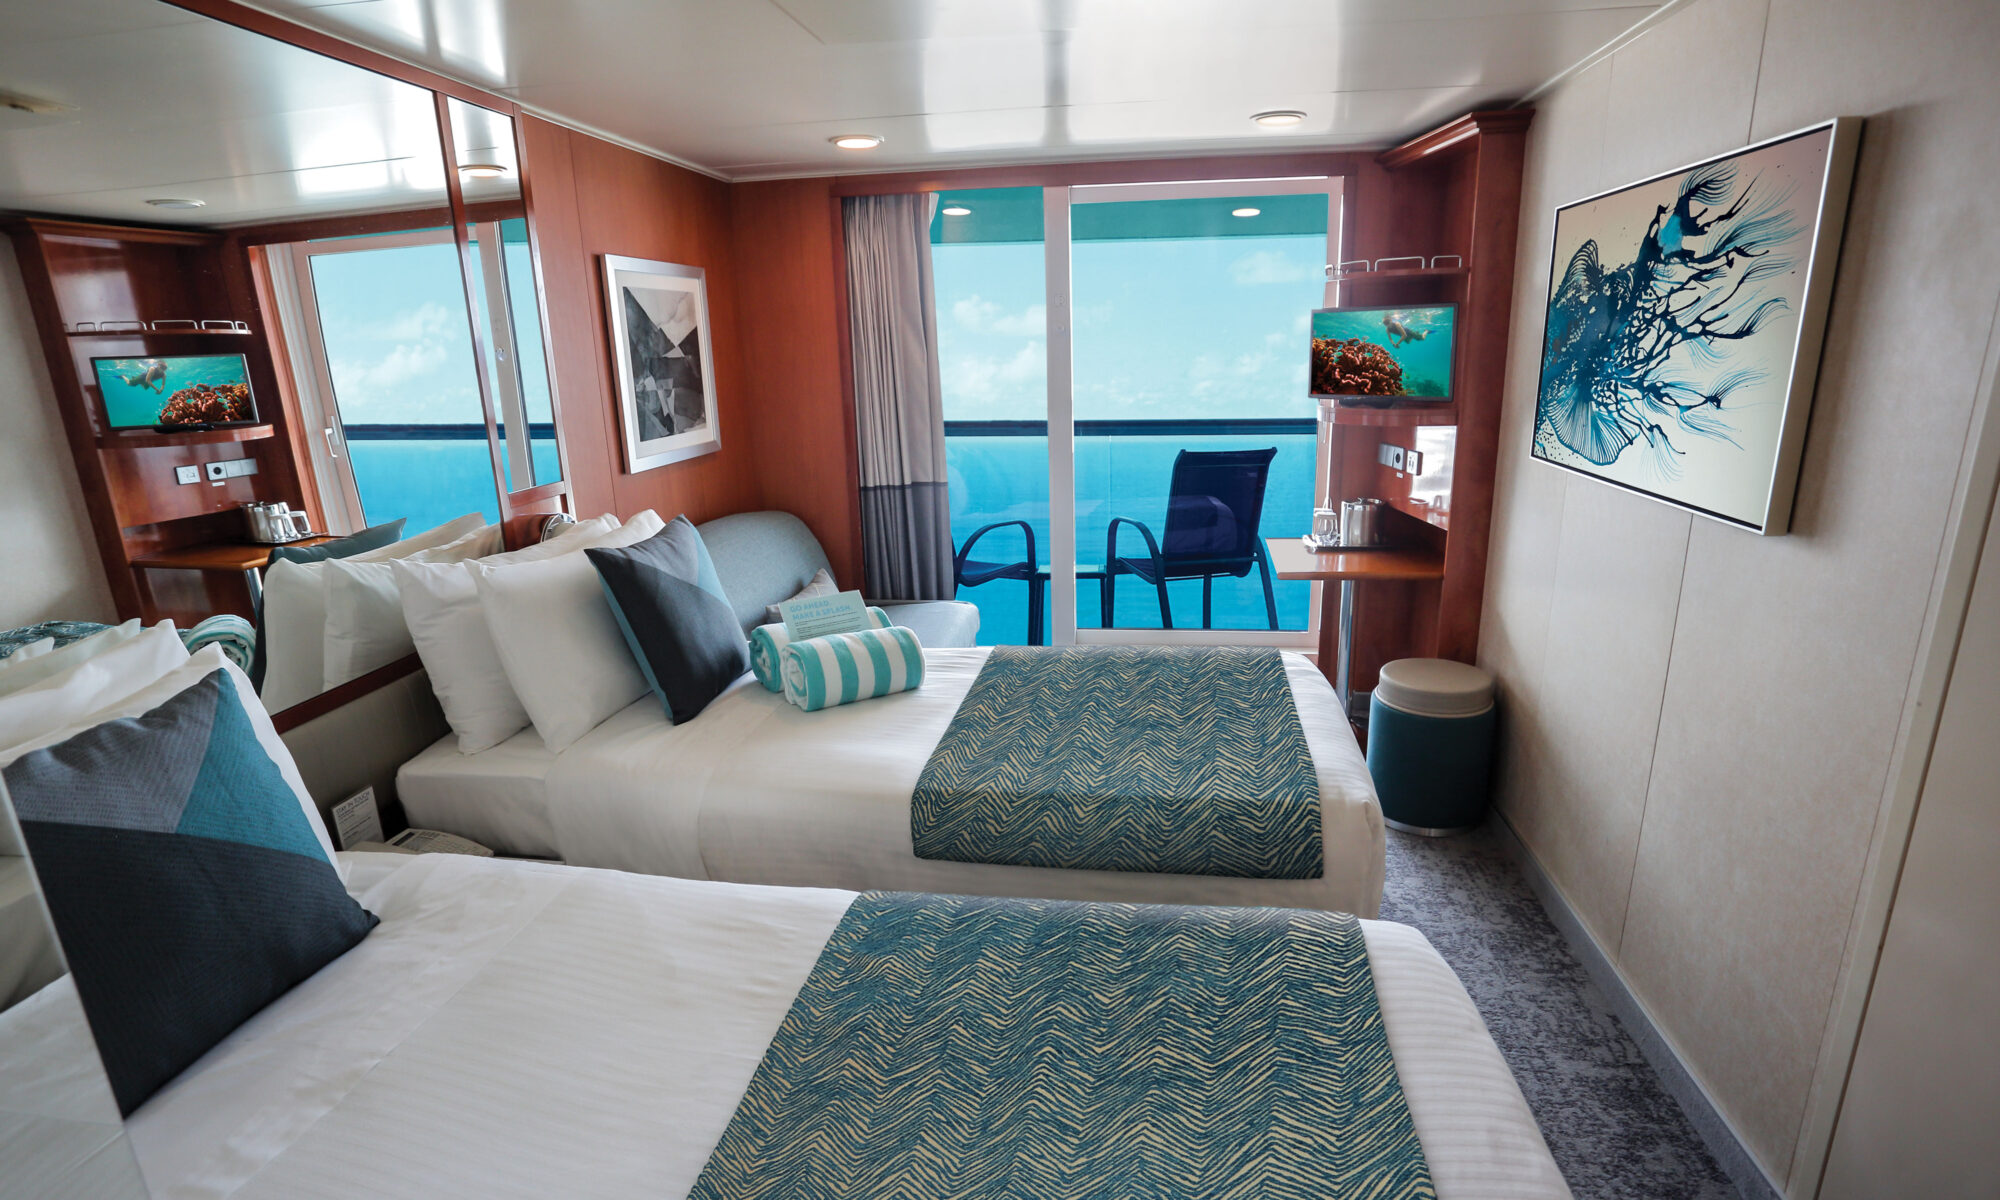 Transpacific Cruise met Norwegian Jewel  Transpacific